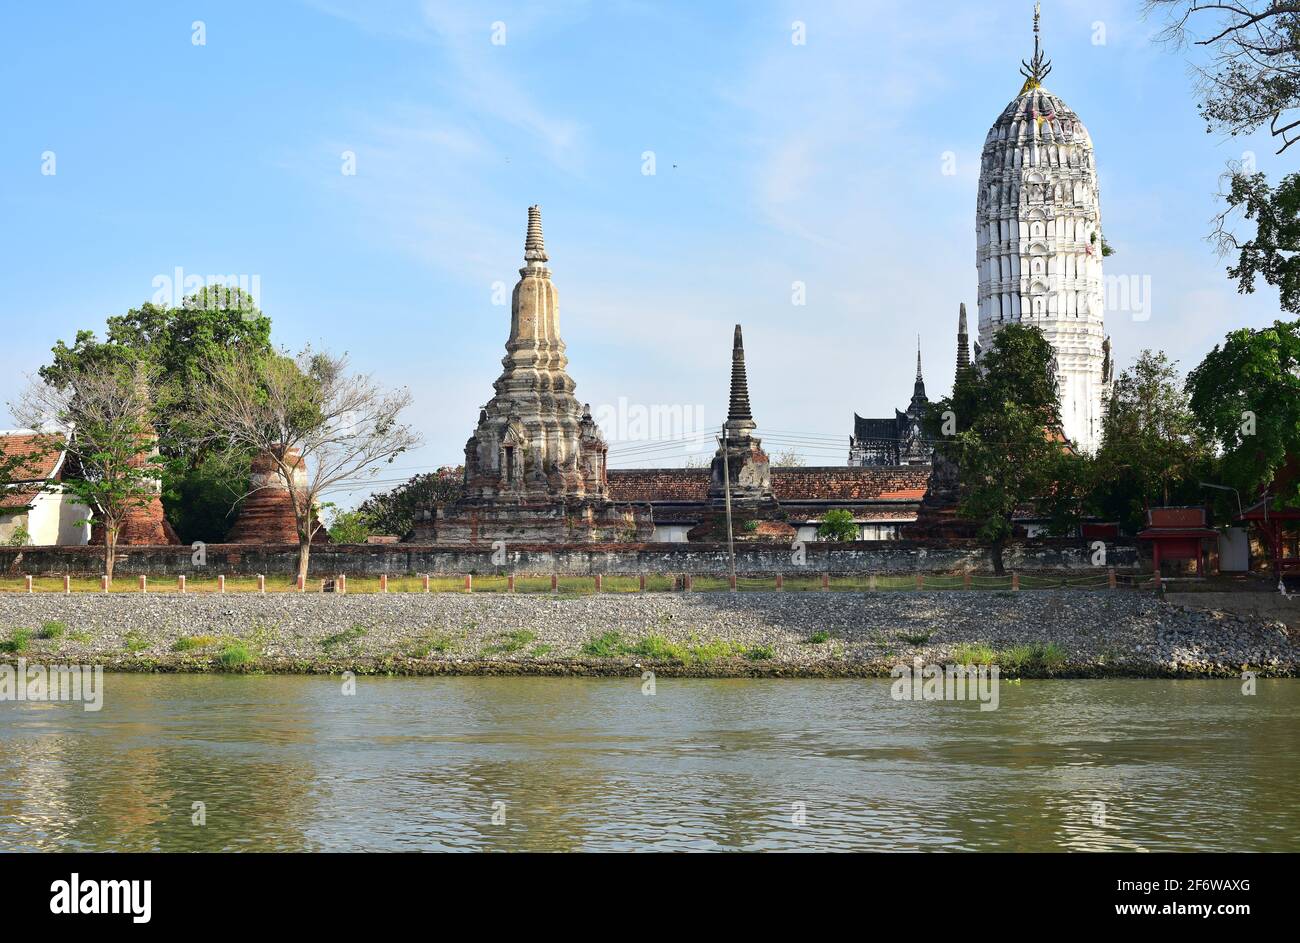 Parque Histórico de Ayutthaya, templo budista de Wat Phutthaisawan (siglo 14th, Patrimonio de la Humanidad). Phra Nakhon Si Ayutthaya, Tailandia. Foto de stock